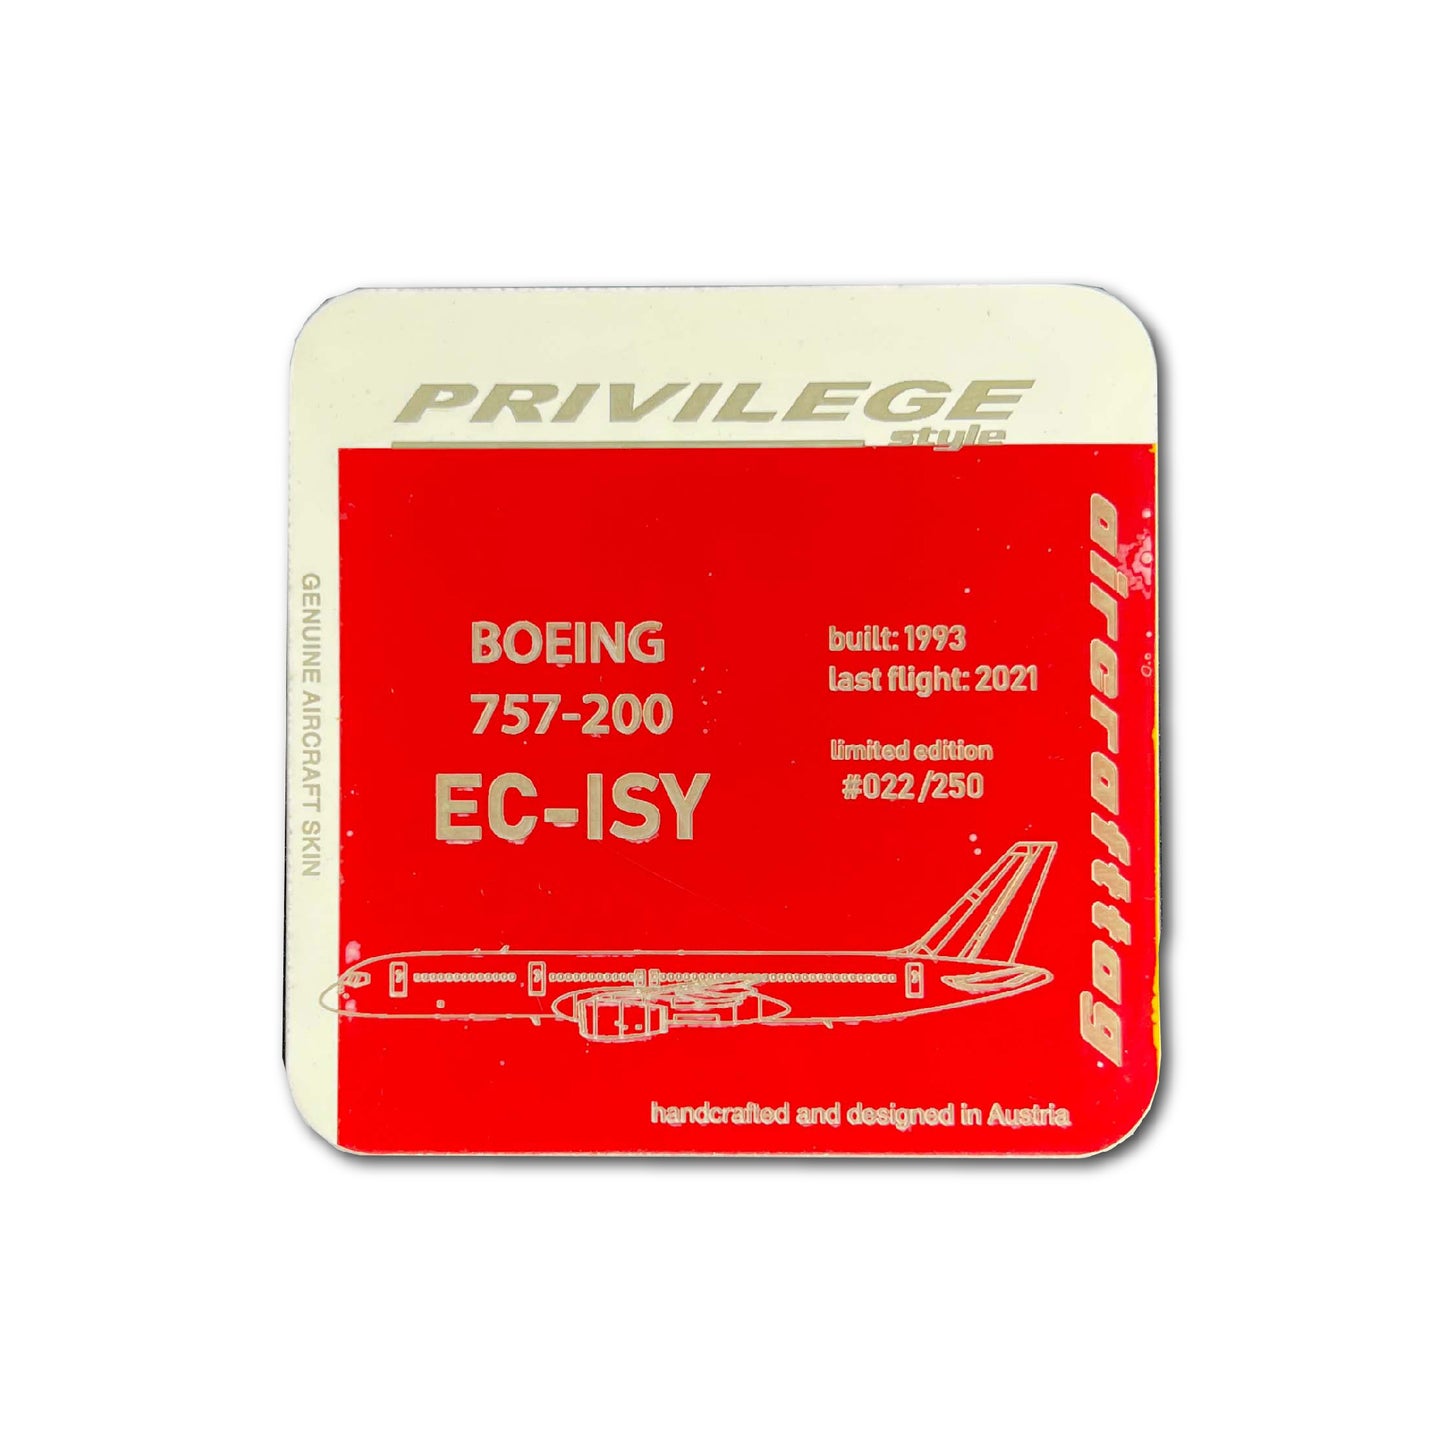 Coaster Boeing 757 - Privilege style - EC-ISY